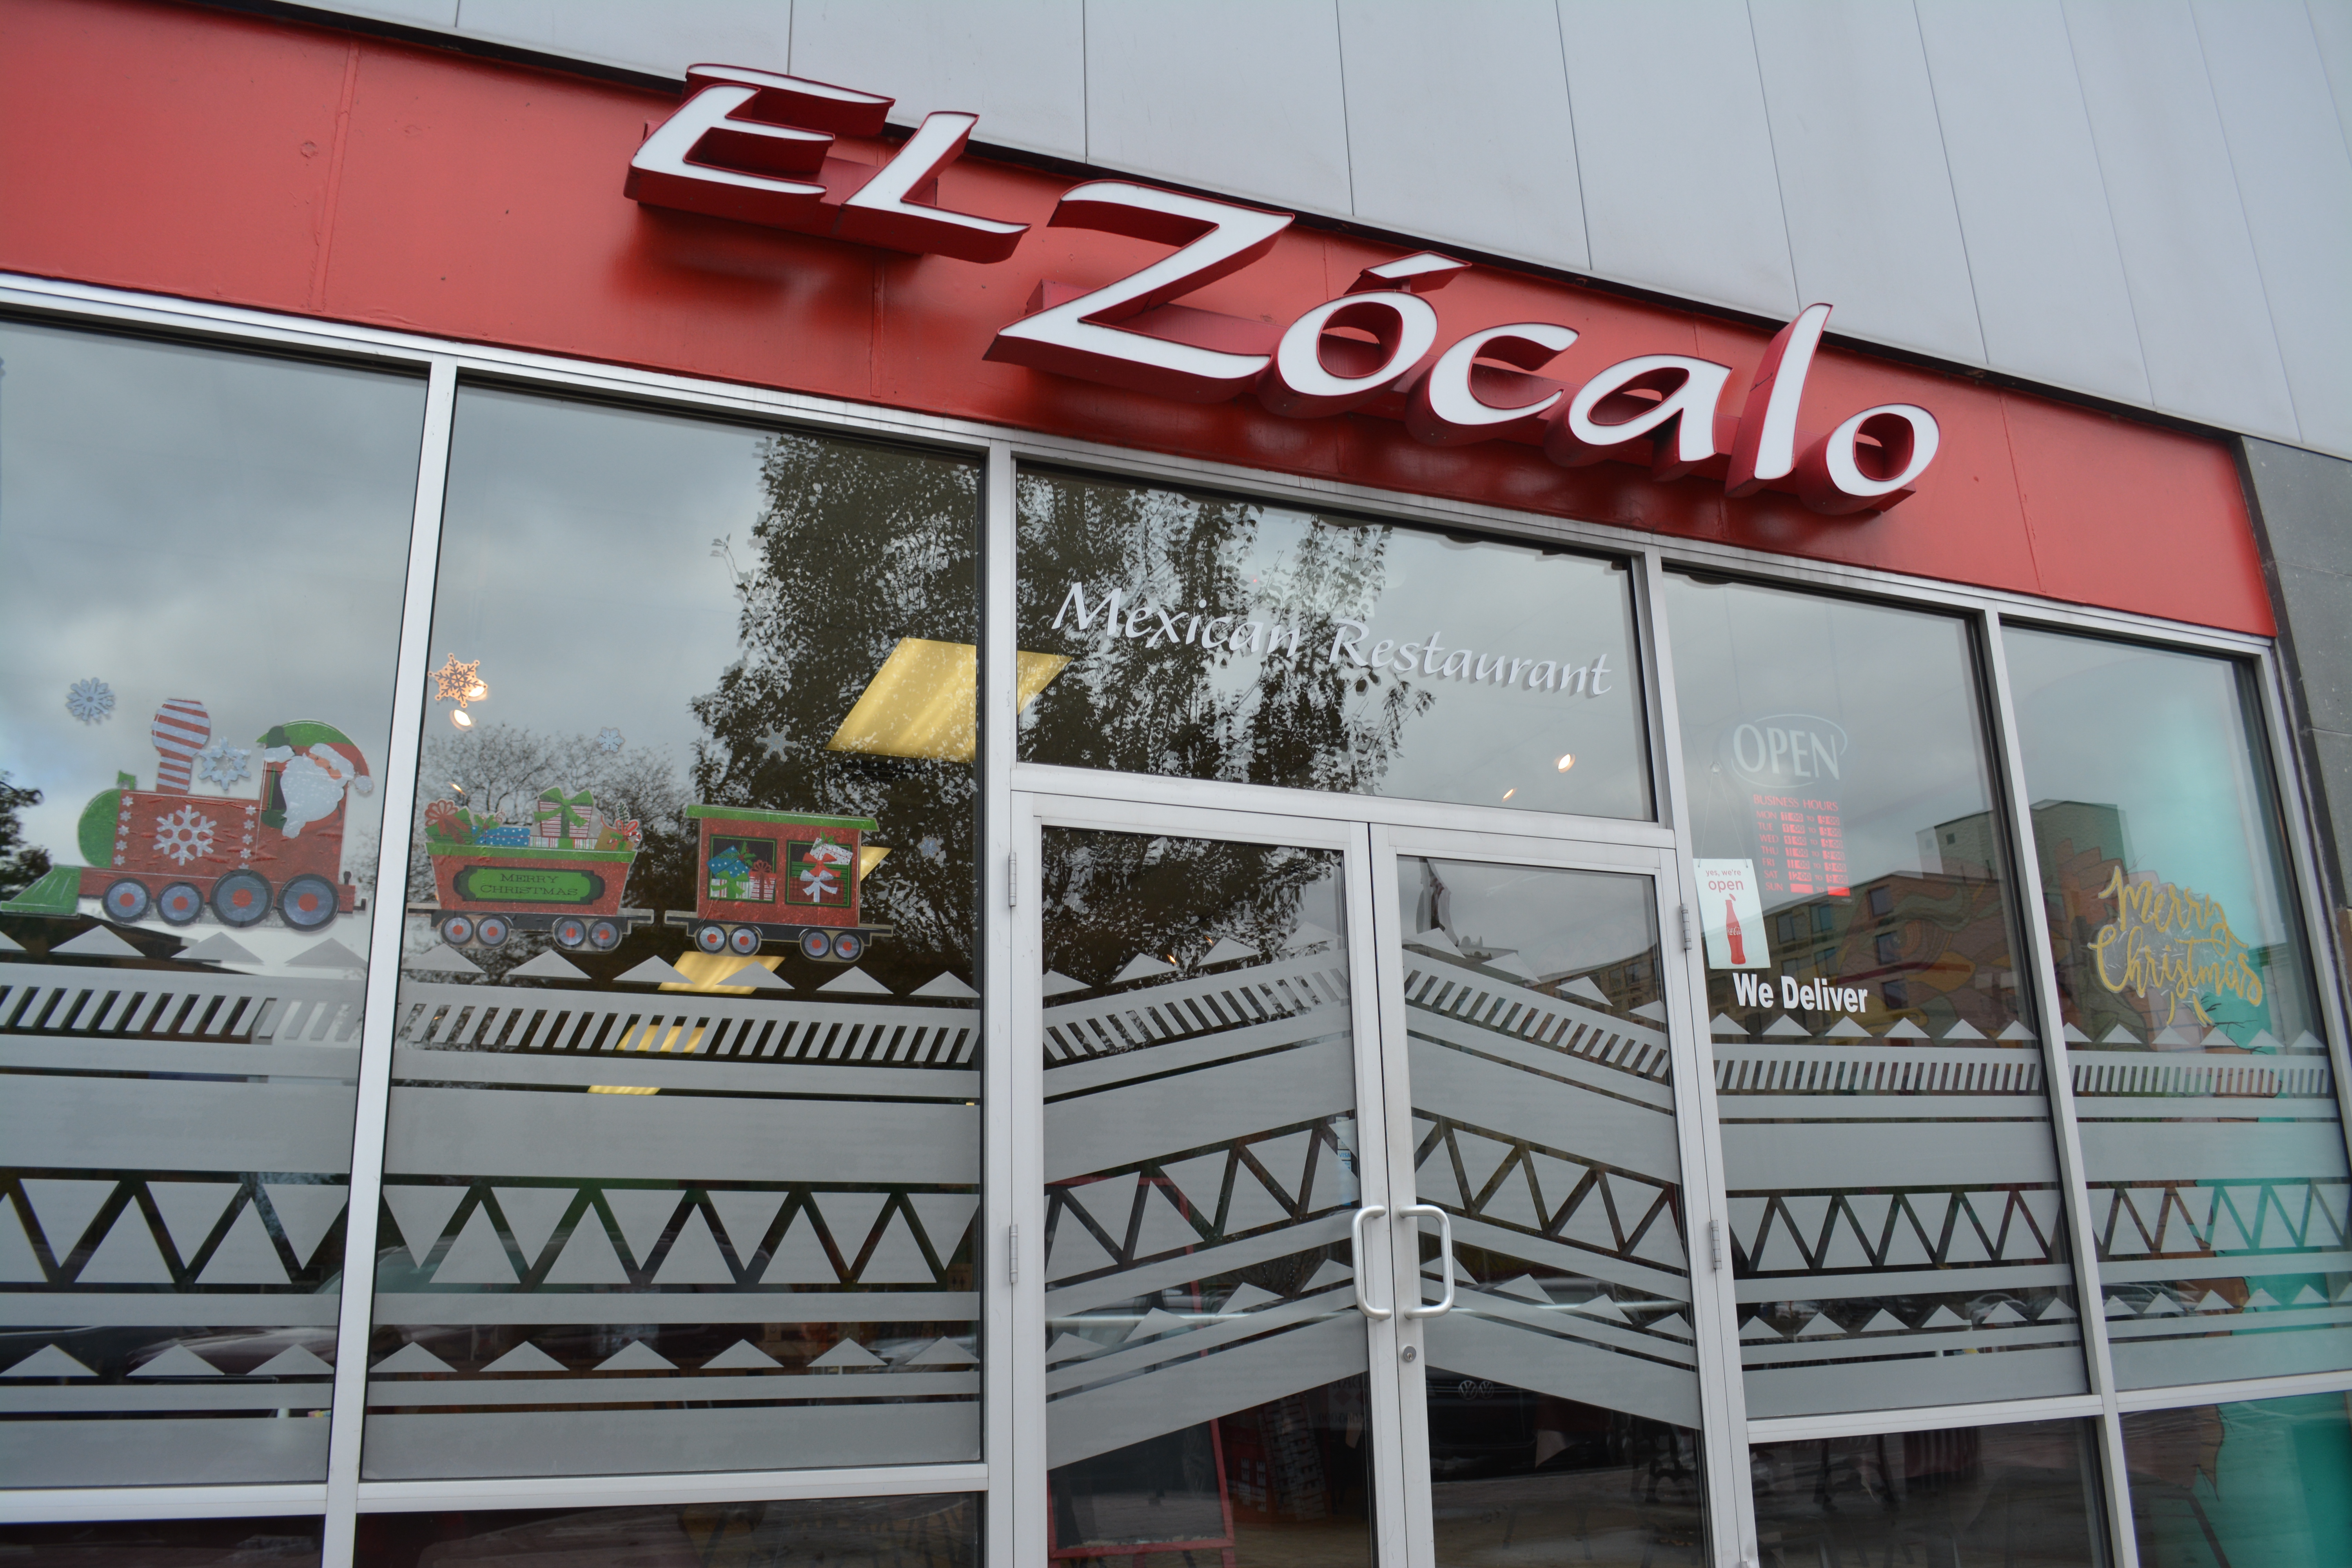 Small Business Snapshot: El Zocalo Mexican Restaurant